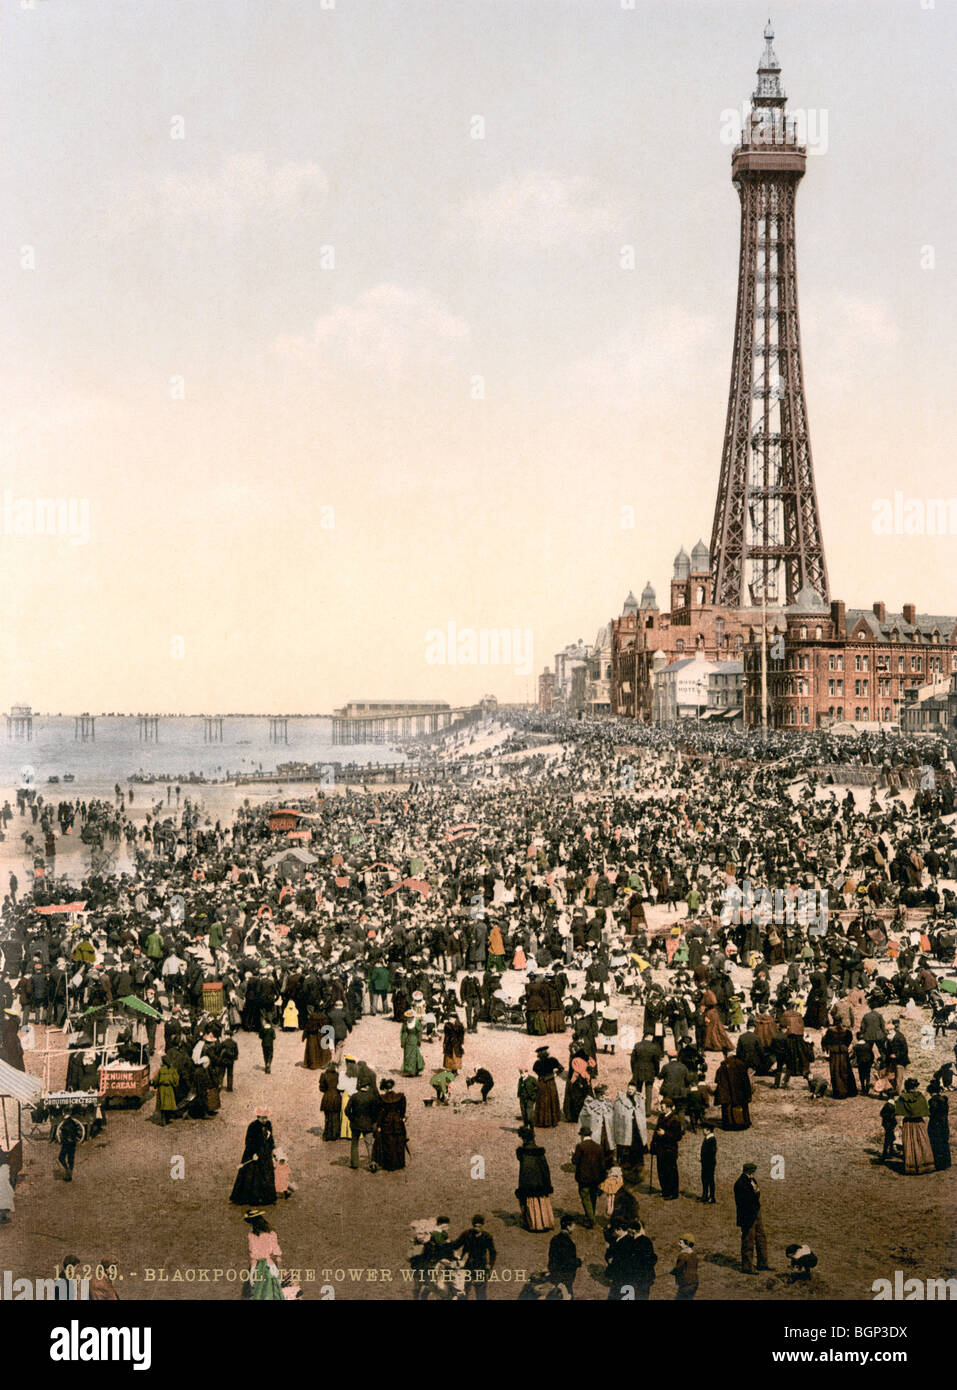 Print A3 17"x12" P1 Vintage 1890's Photochrom Photo North Pier Blackpool